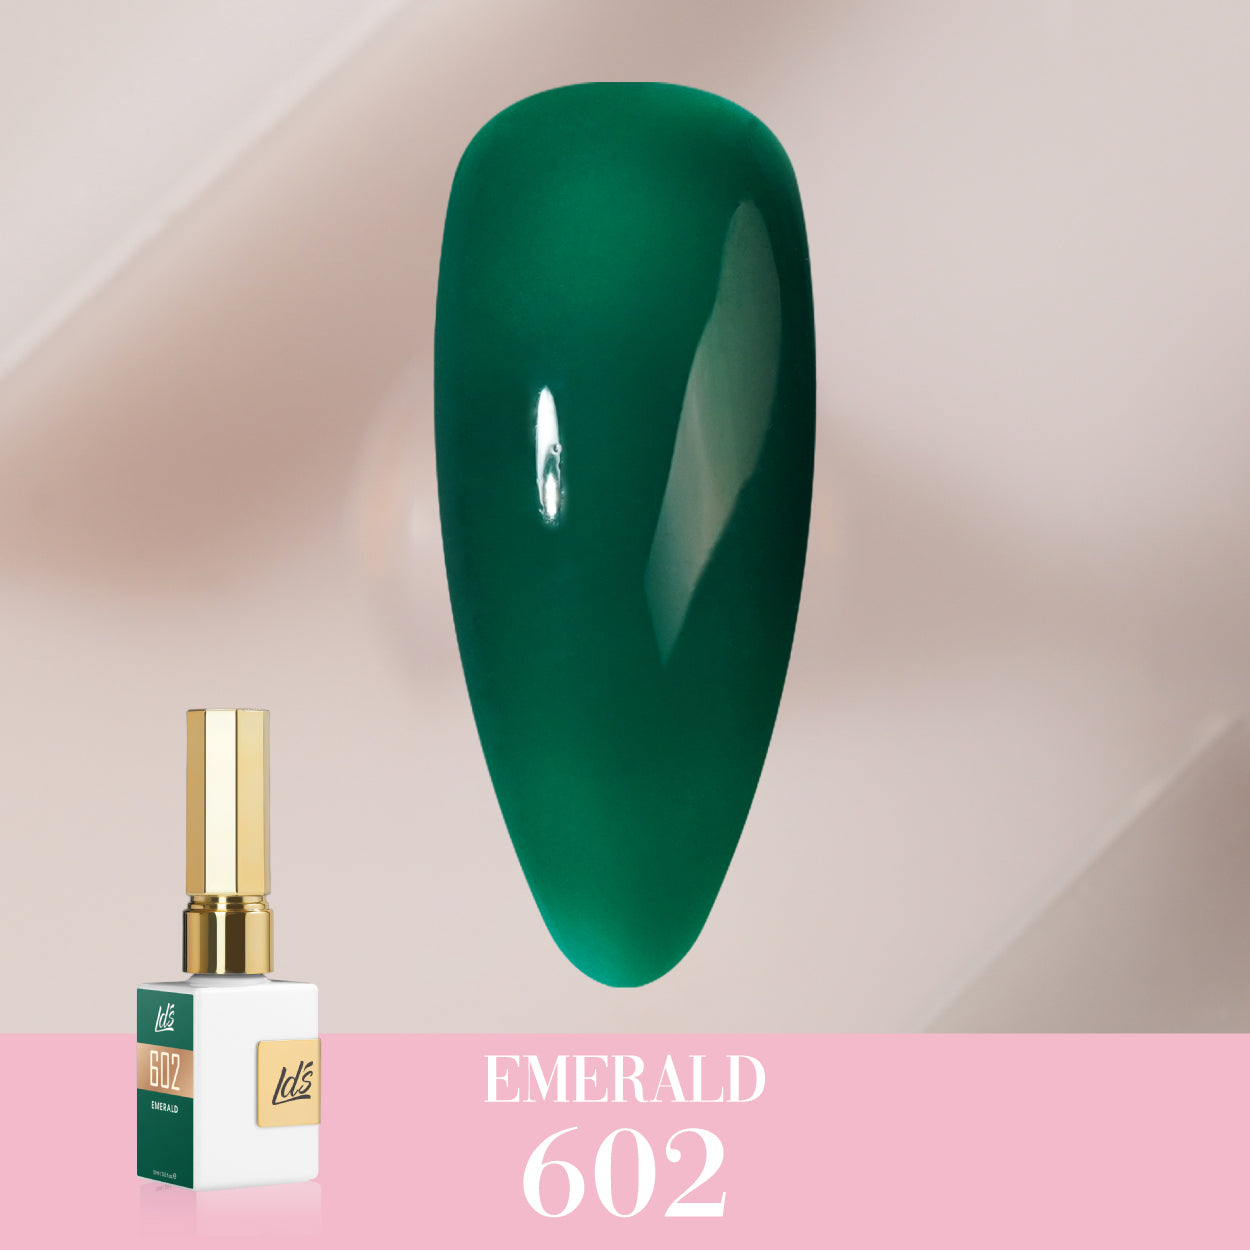 LDS Color Craze Collection - 602 Emerald - Gel Polish 0.5oz